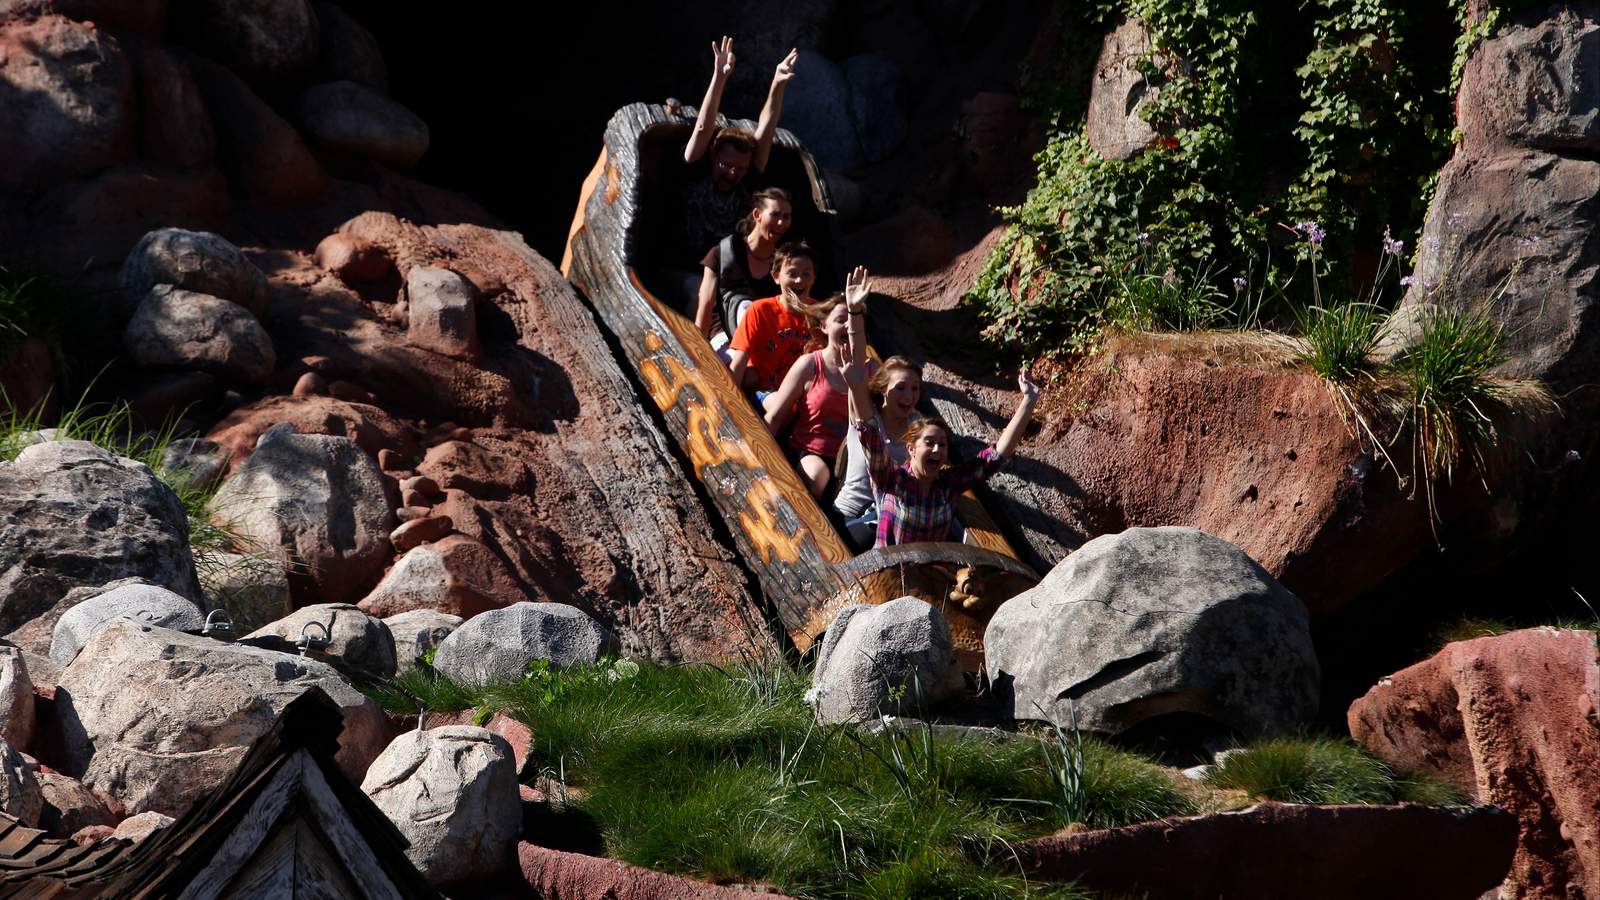 Petition calls for Disney Parks to change theme of Splash Mountain